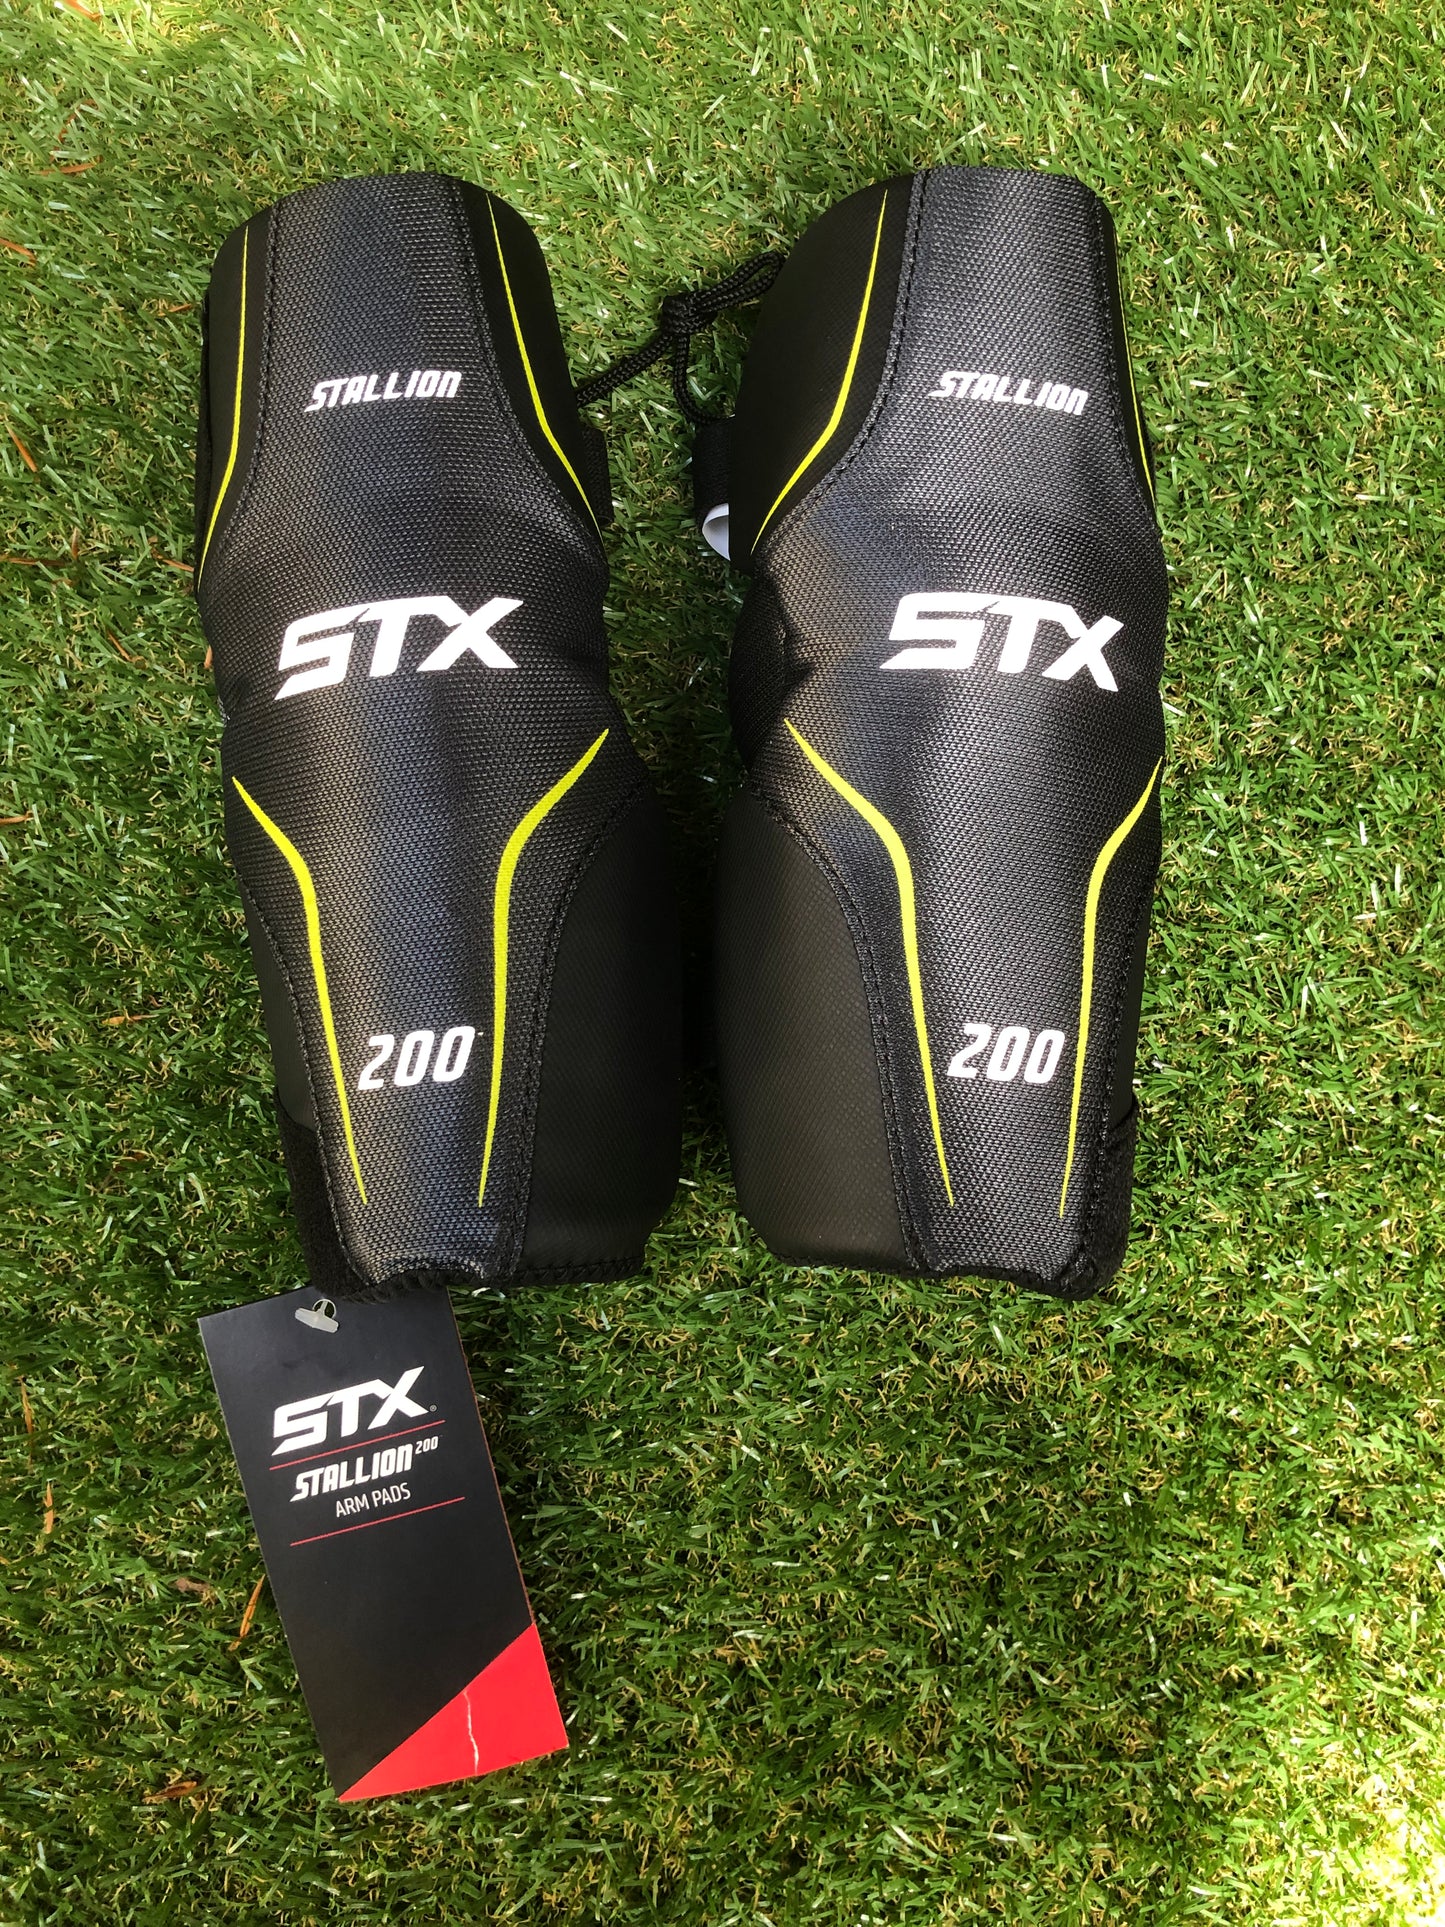 STX Stallion 200 Men's Lacrosse Arm Pads